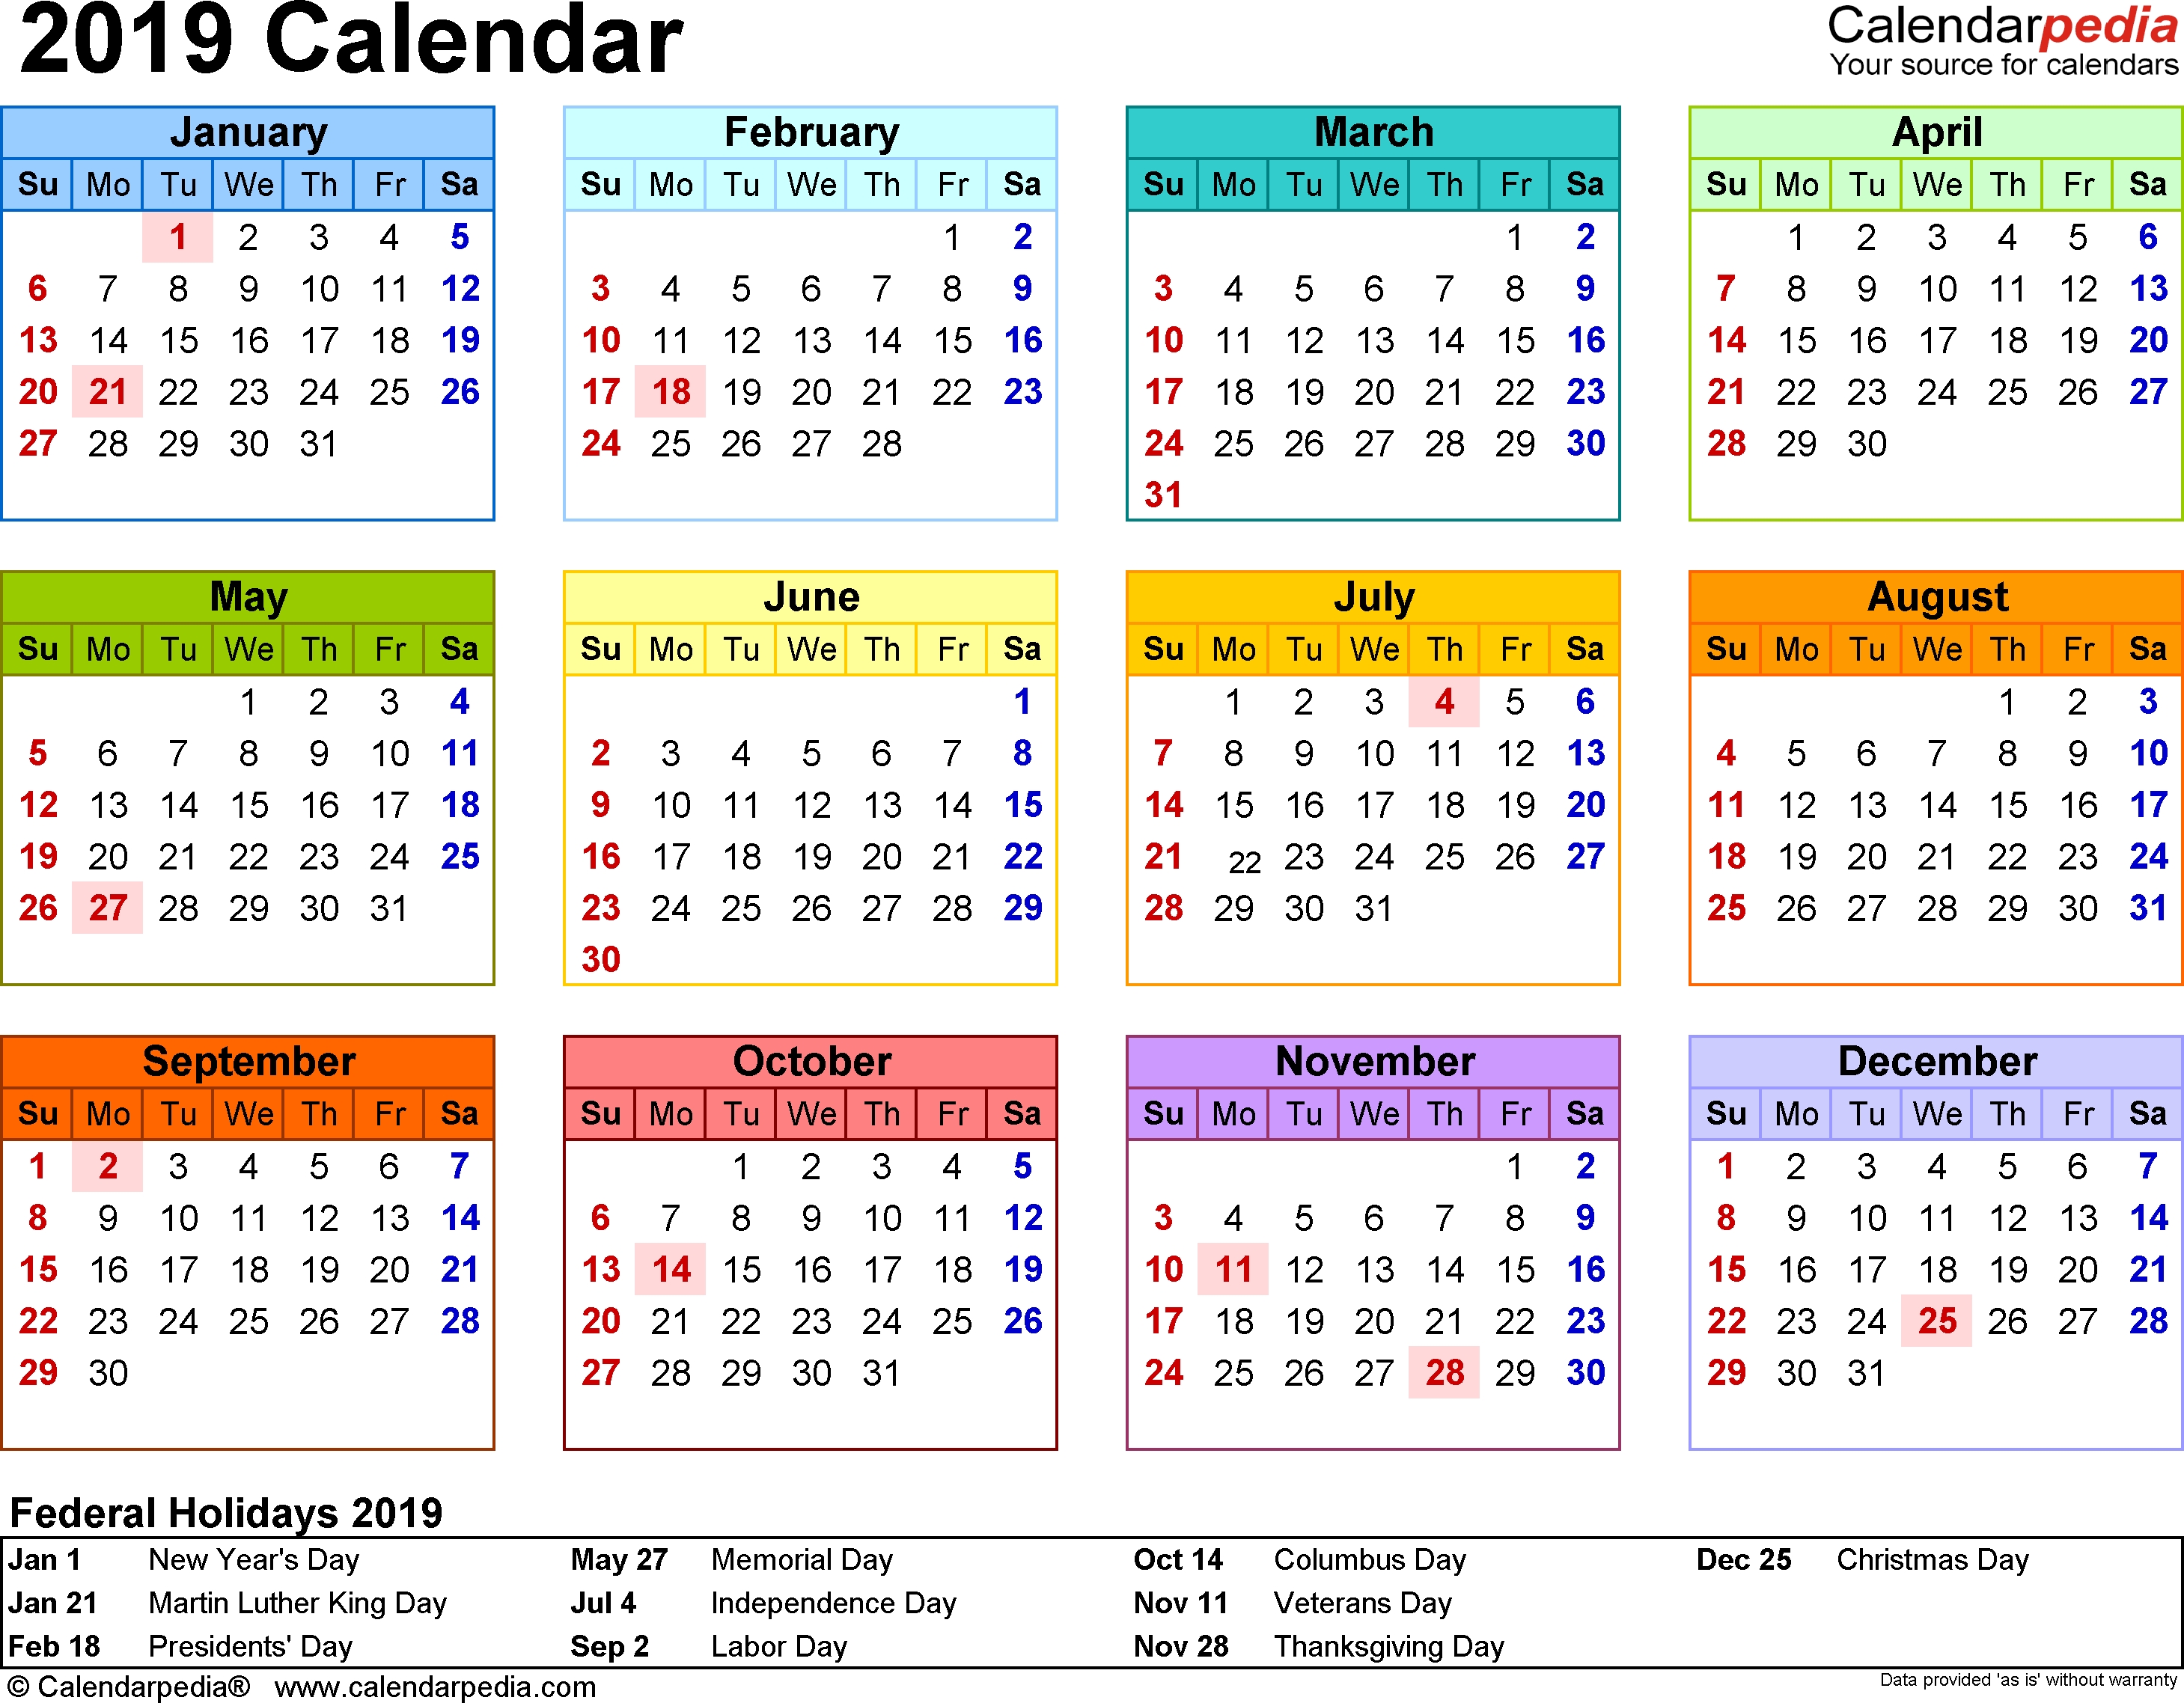 2019 Calendar Pdf - 17 Free Printable Calendar Templates in Printable Calendar Monthly 2019-2020 Free 11X17 Large Boxes